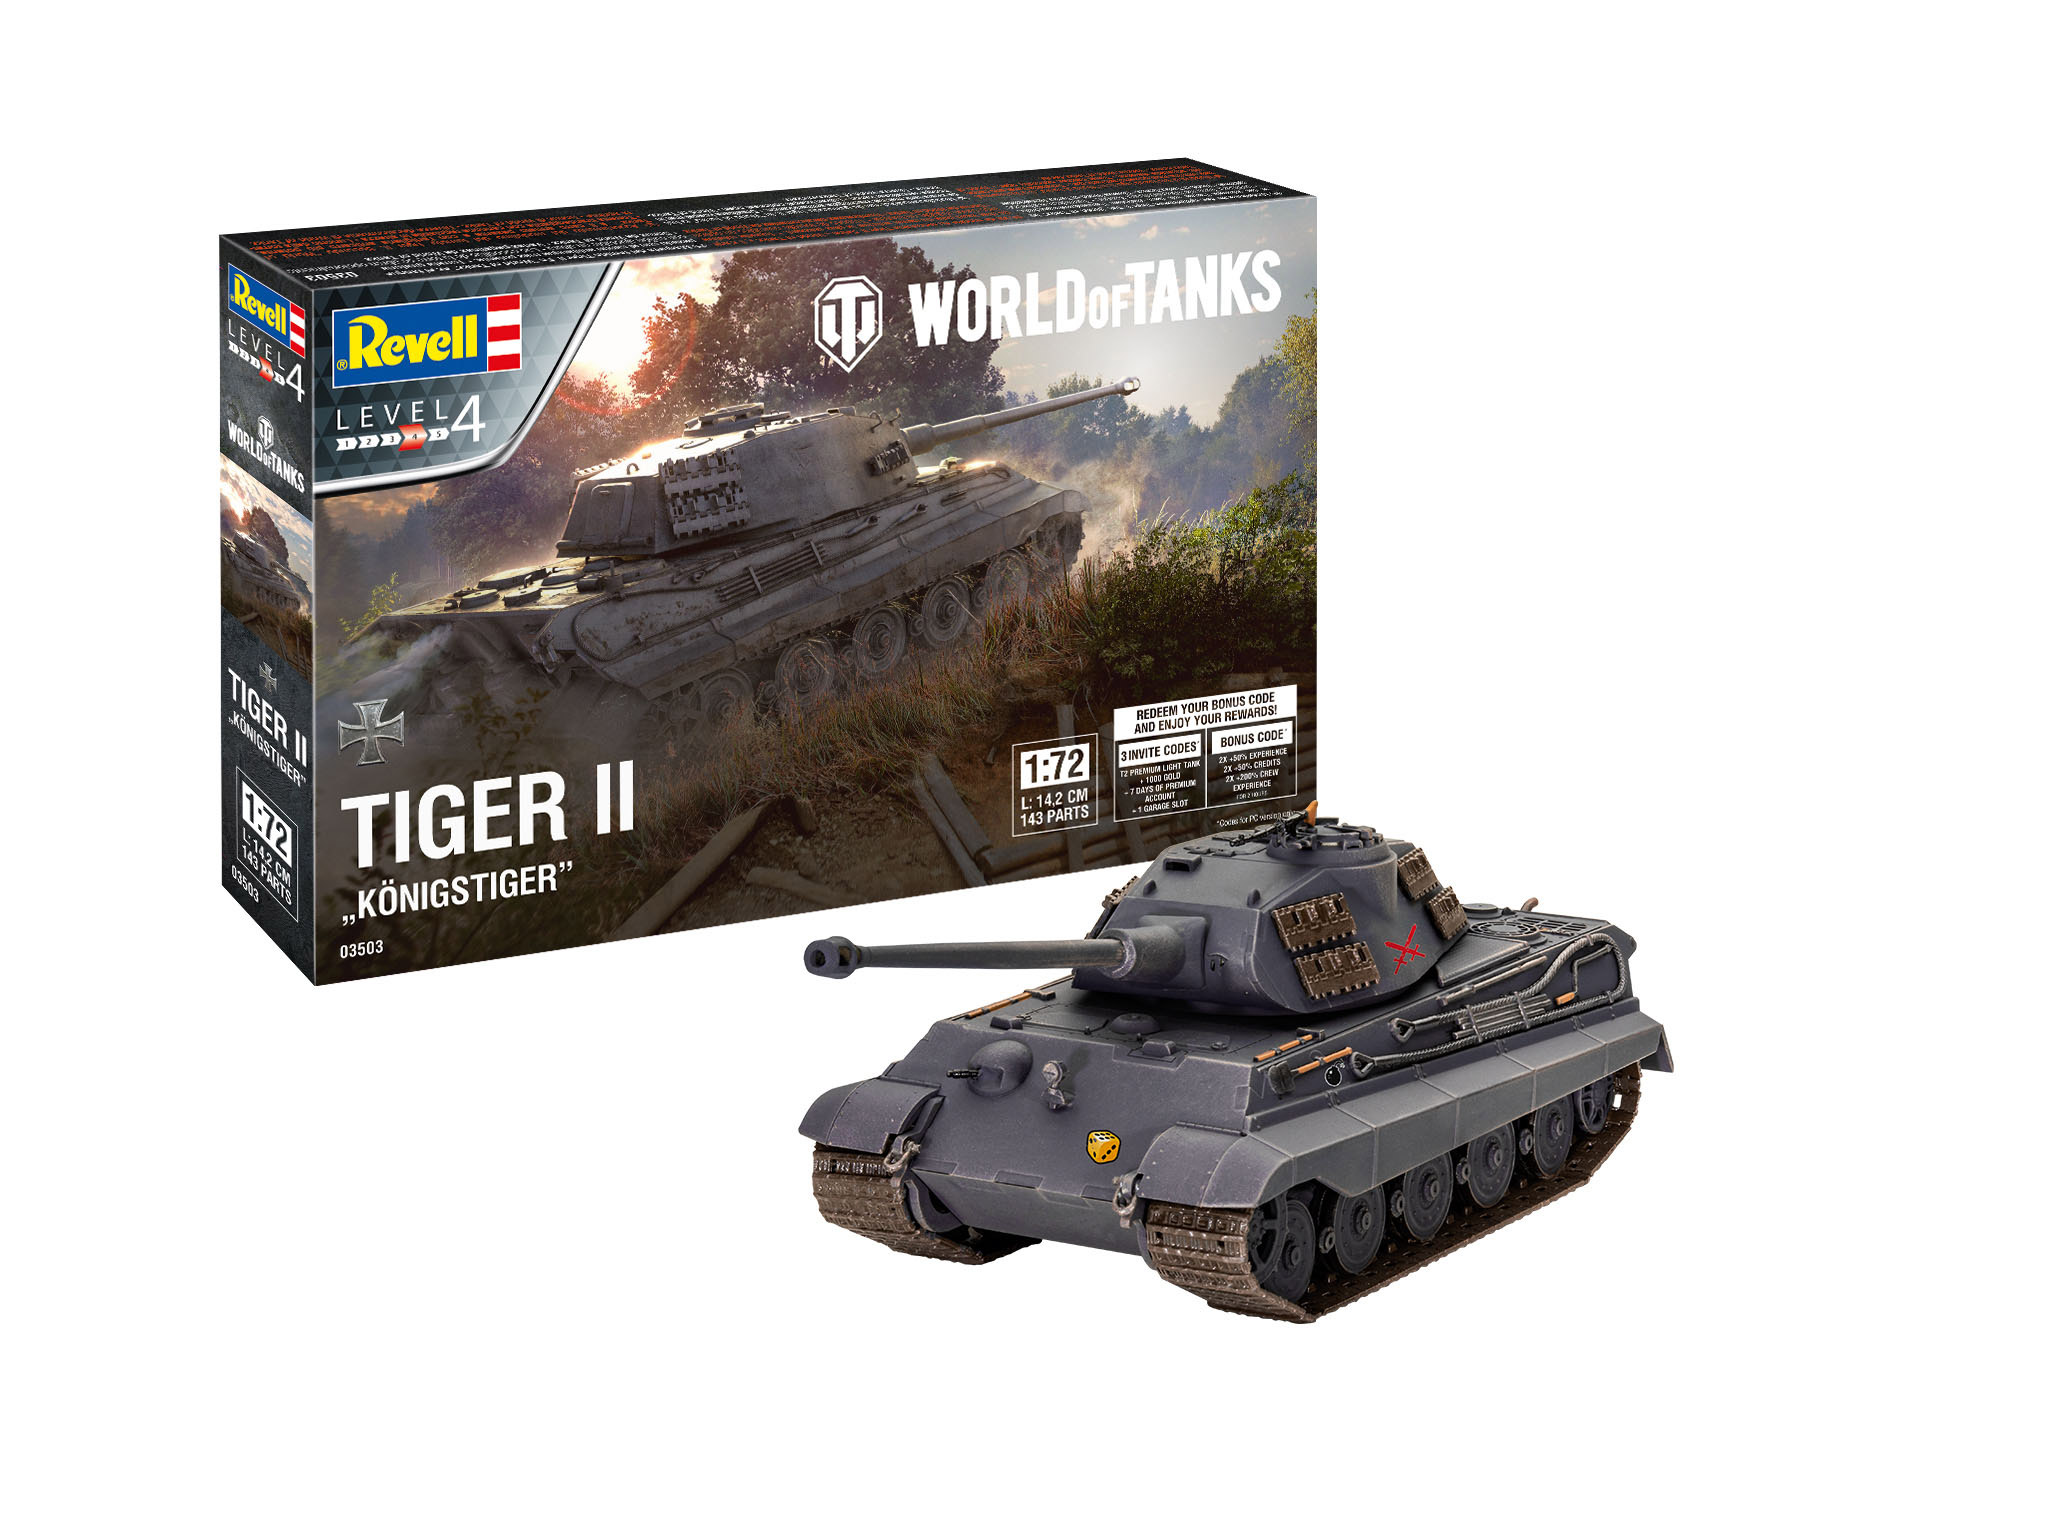 Revell Tiger II Ausf. B "Konigstiger" "World of Tanks" in 1:72 bouwpakket